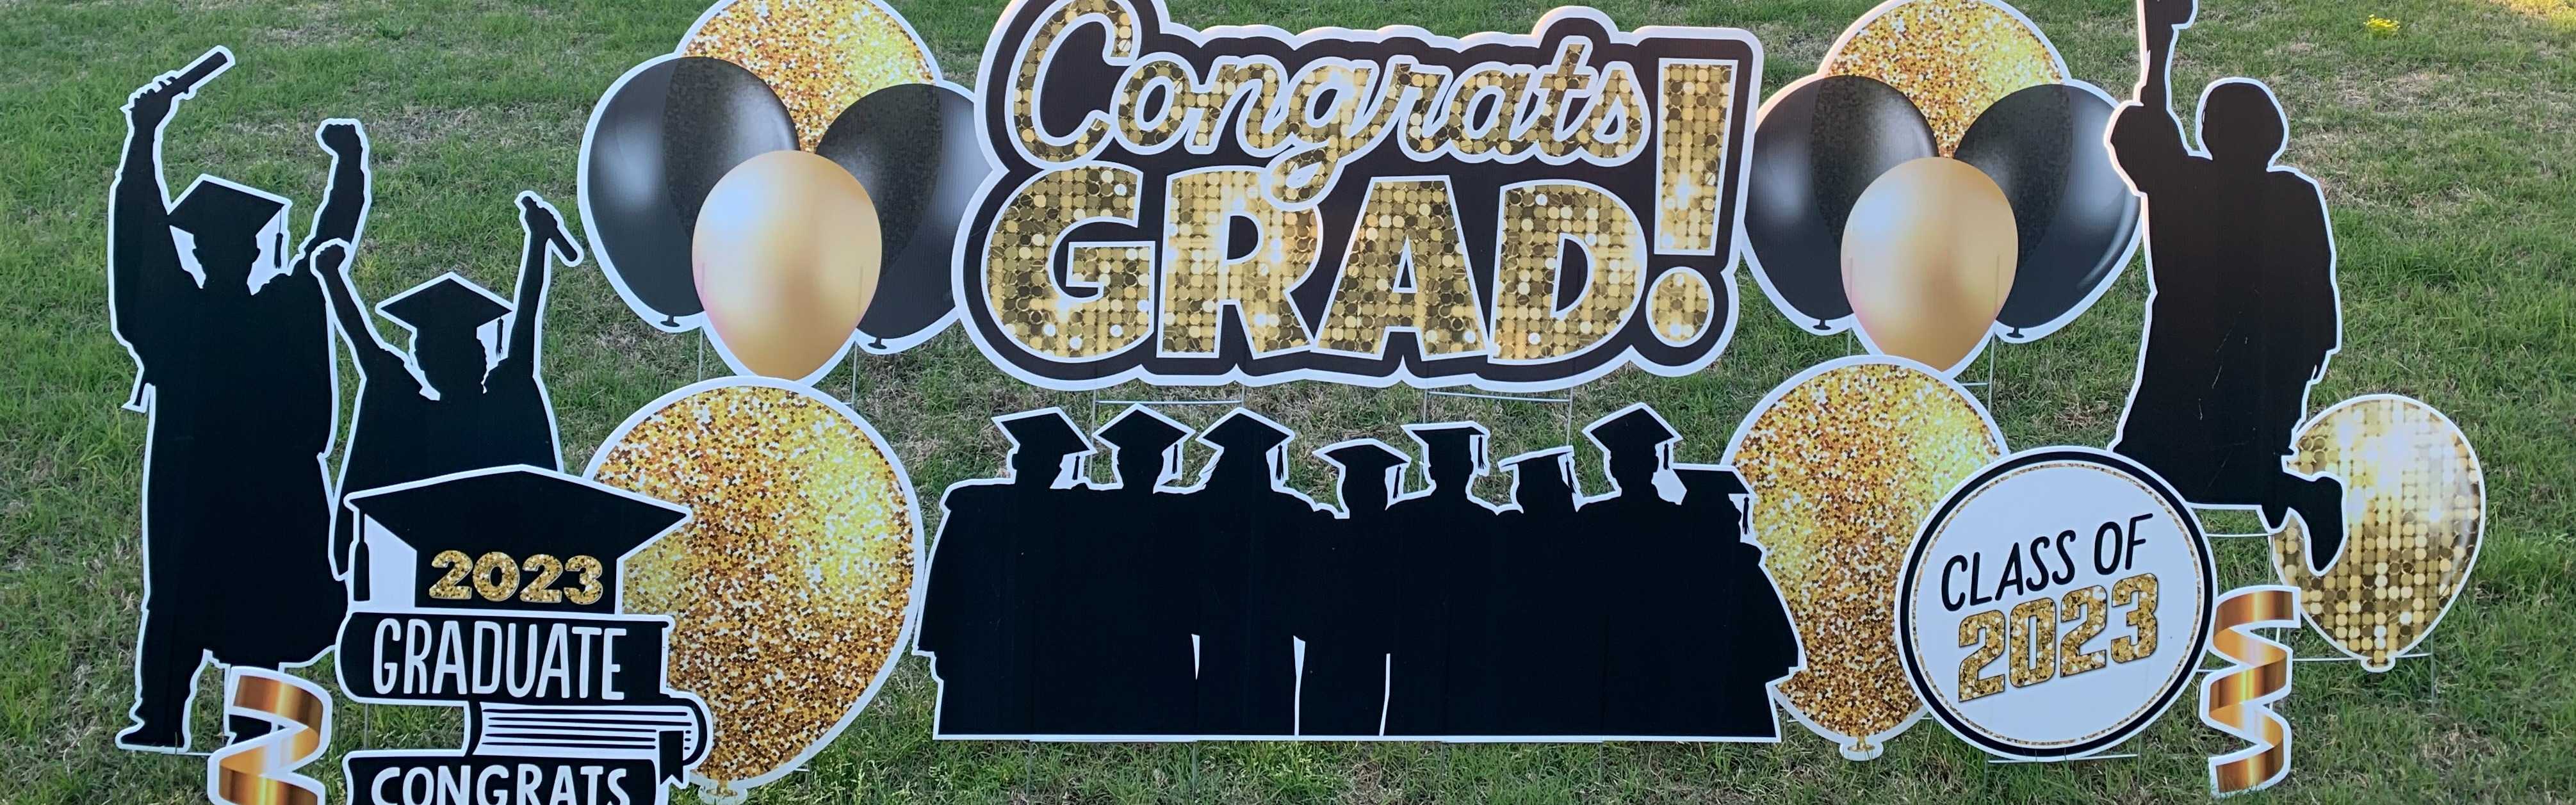 Yard card sign graduation congrates grad 